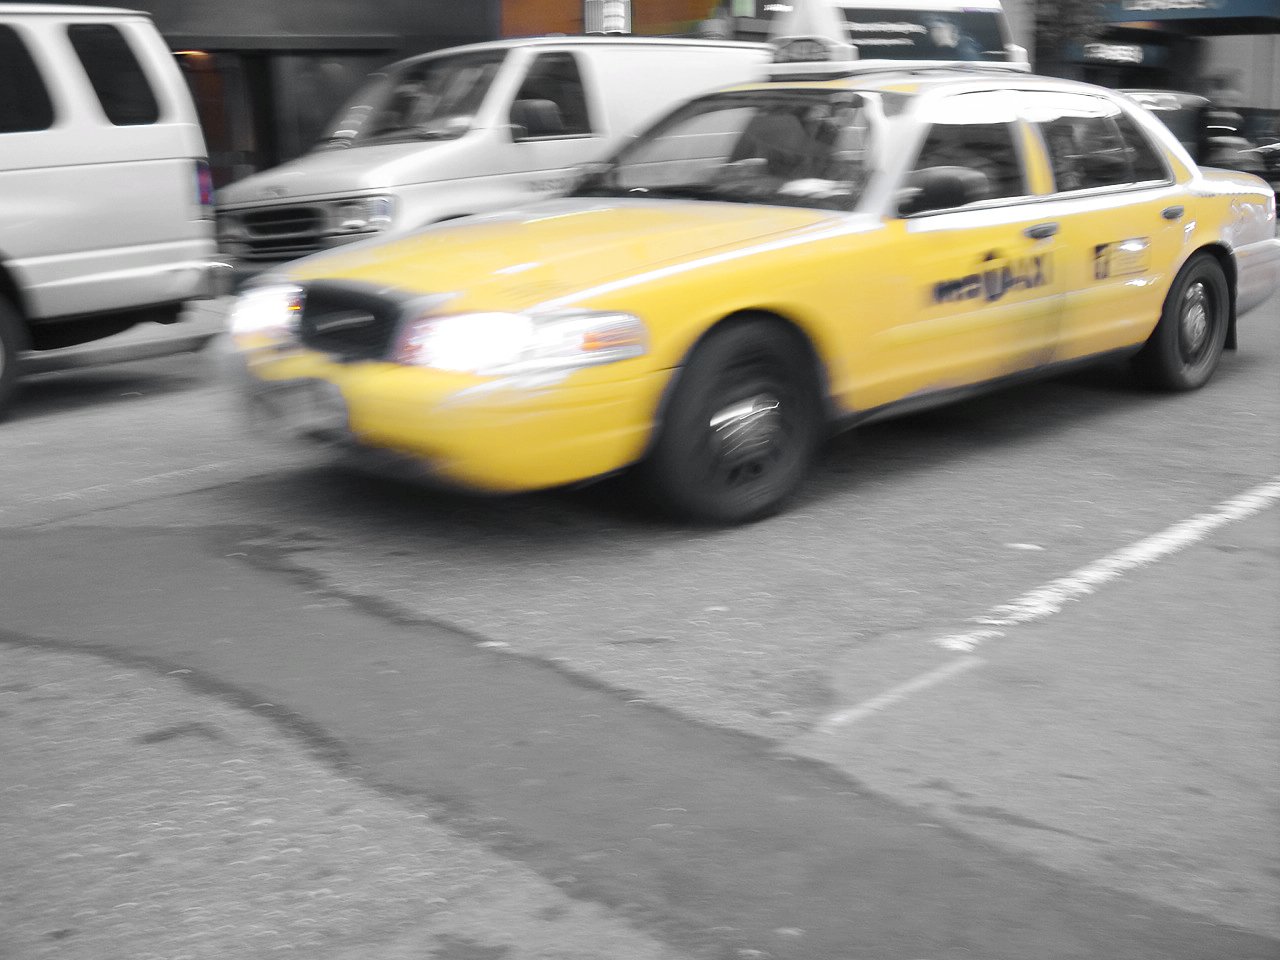 a yellow taxi cab speeding down a busy street